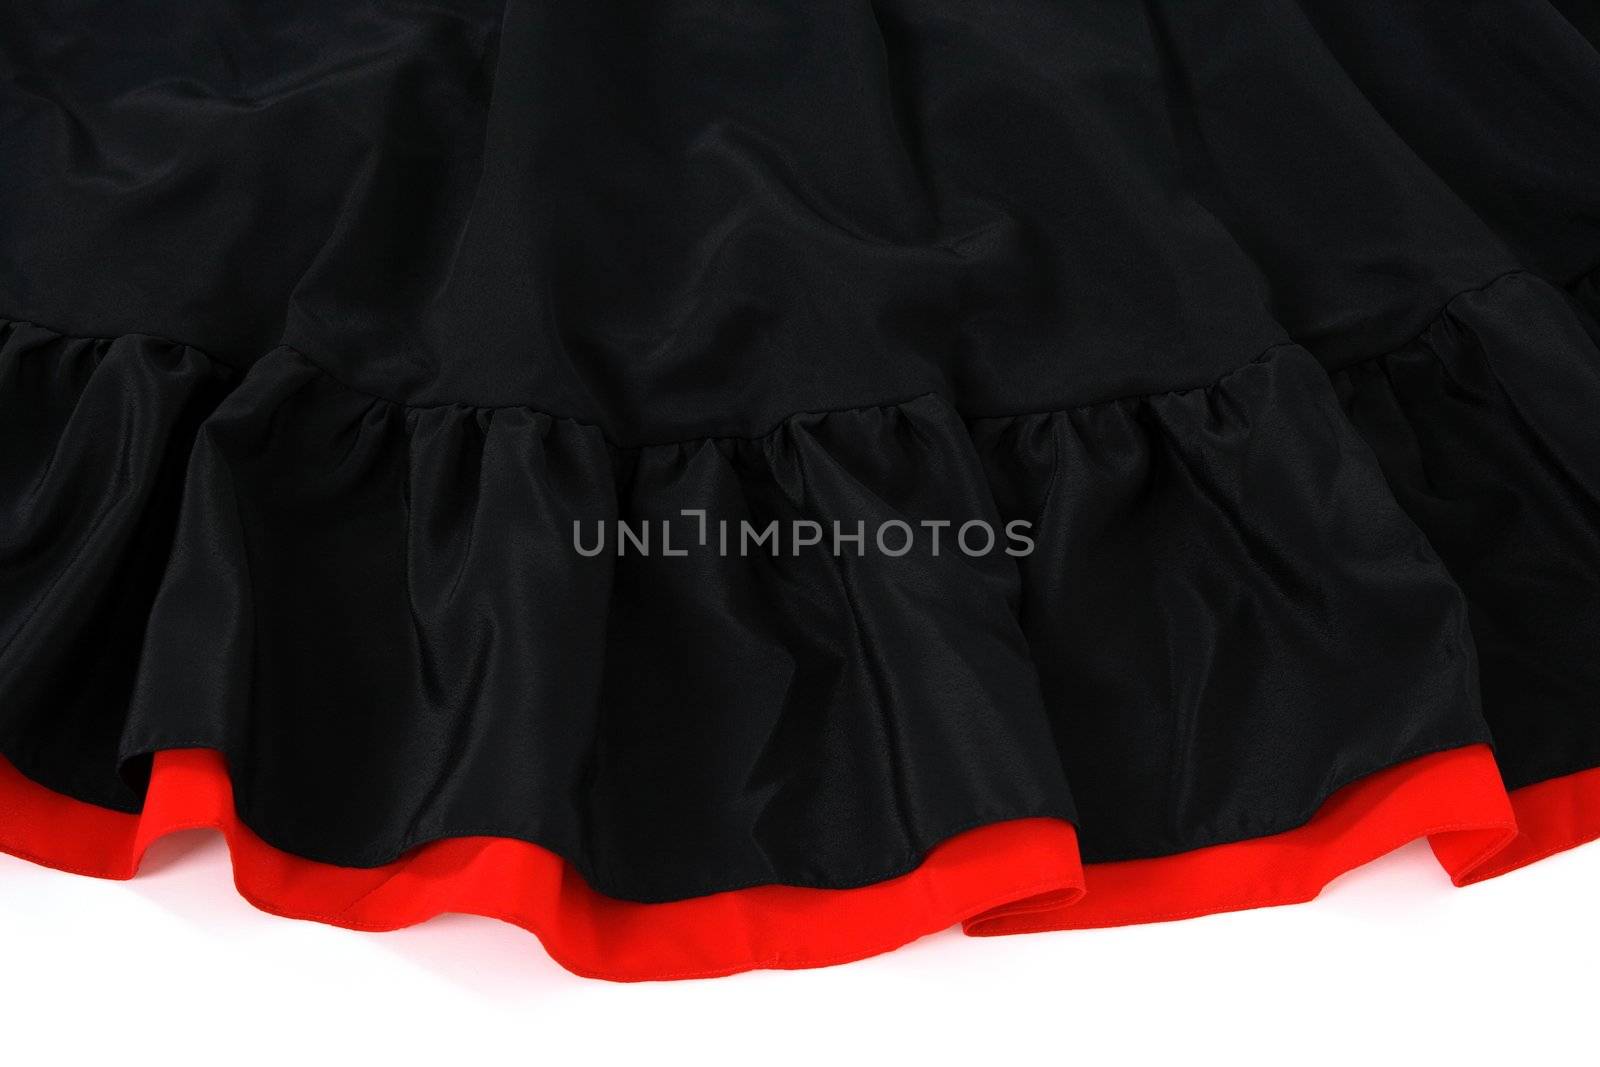 Black and red Spanish flamenco skirt on white background.